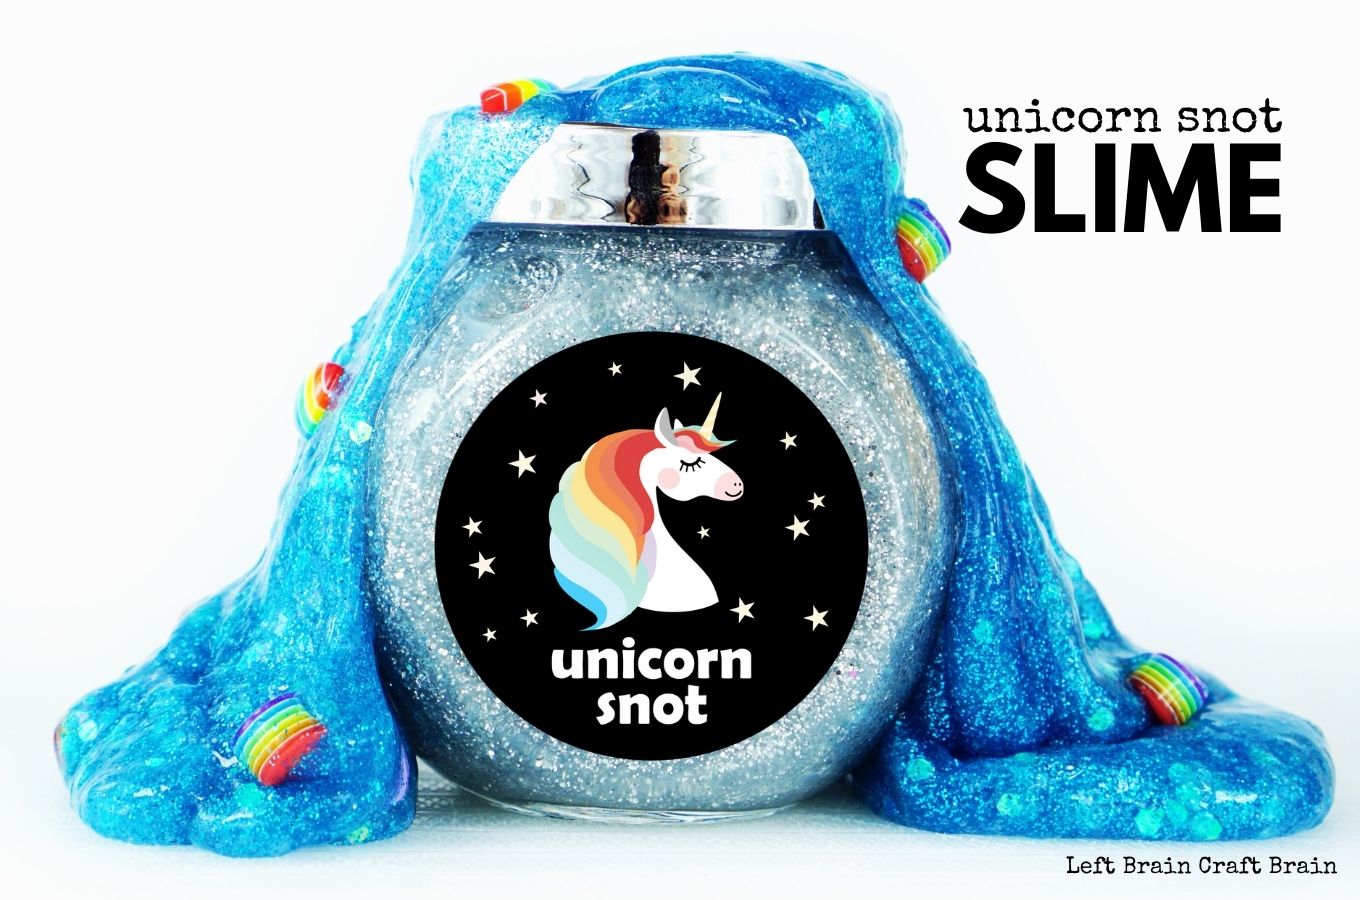 unicorn snot slime 1360x900